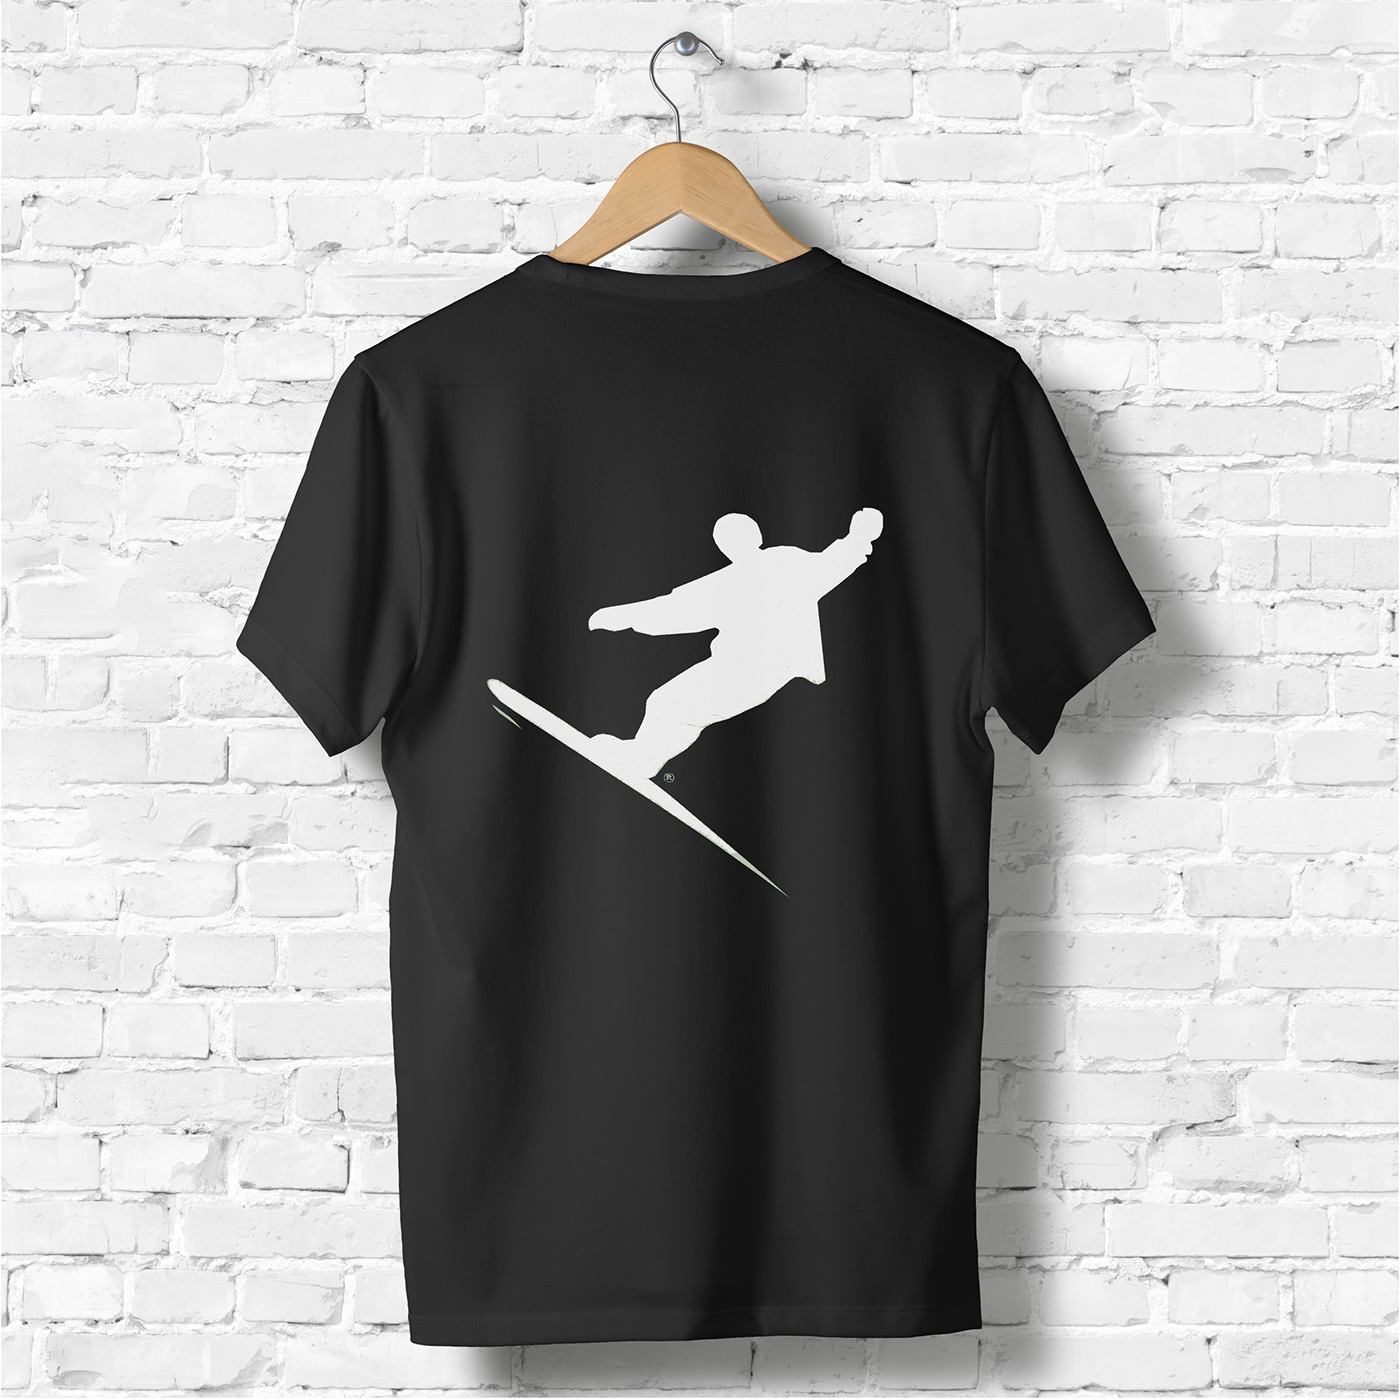 black and white graphic design  graphic tee Snowboarder T-Shirt Design